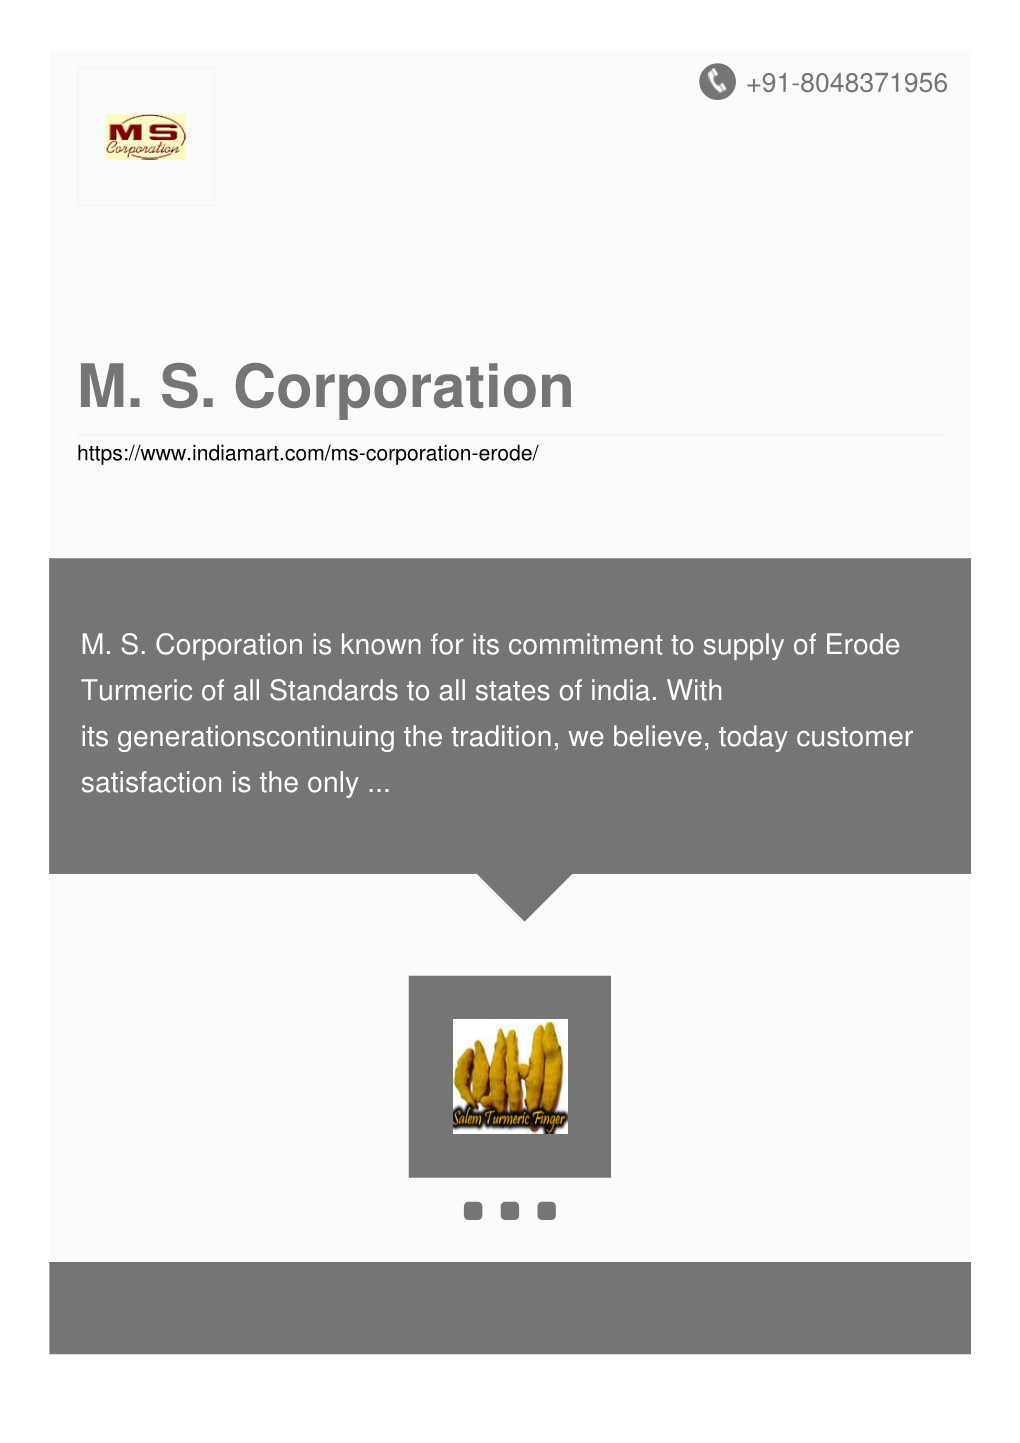 MS Corporation